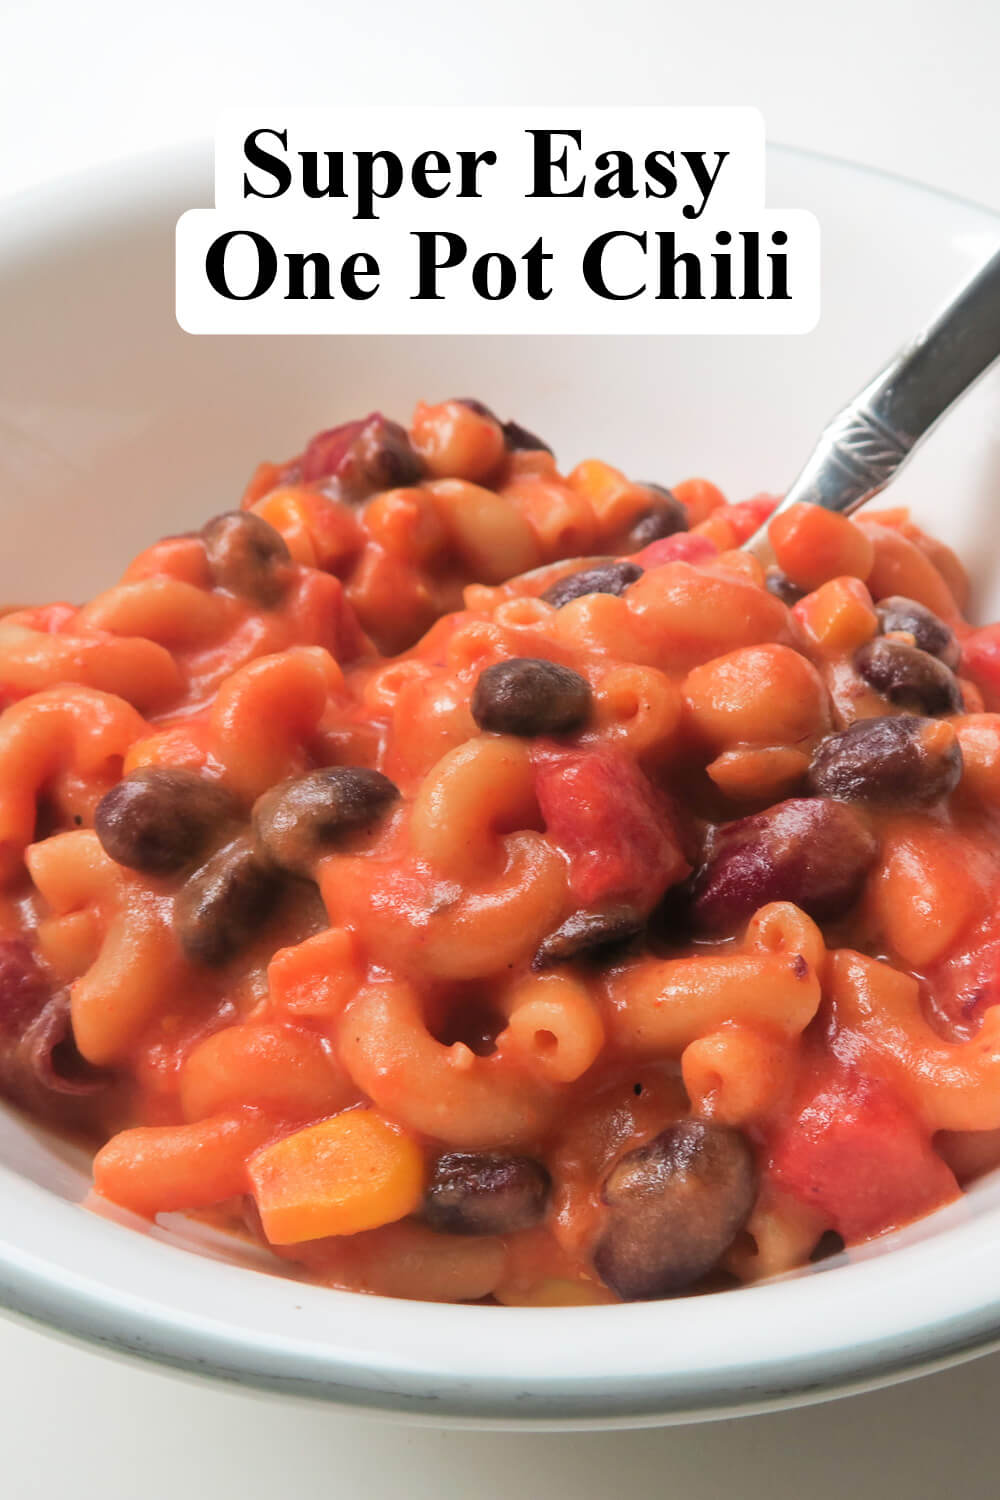 Super Easy One Pot Chili